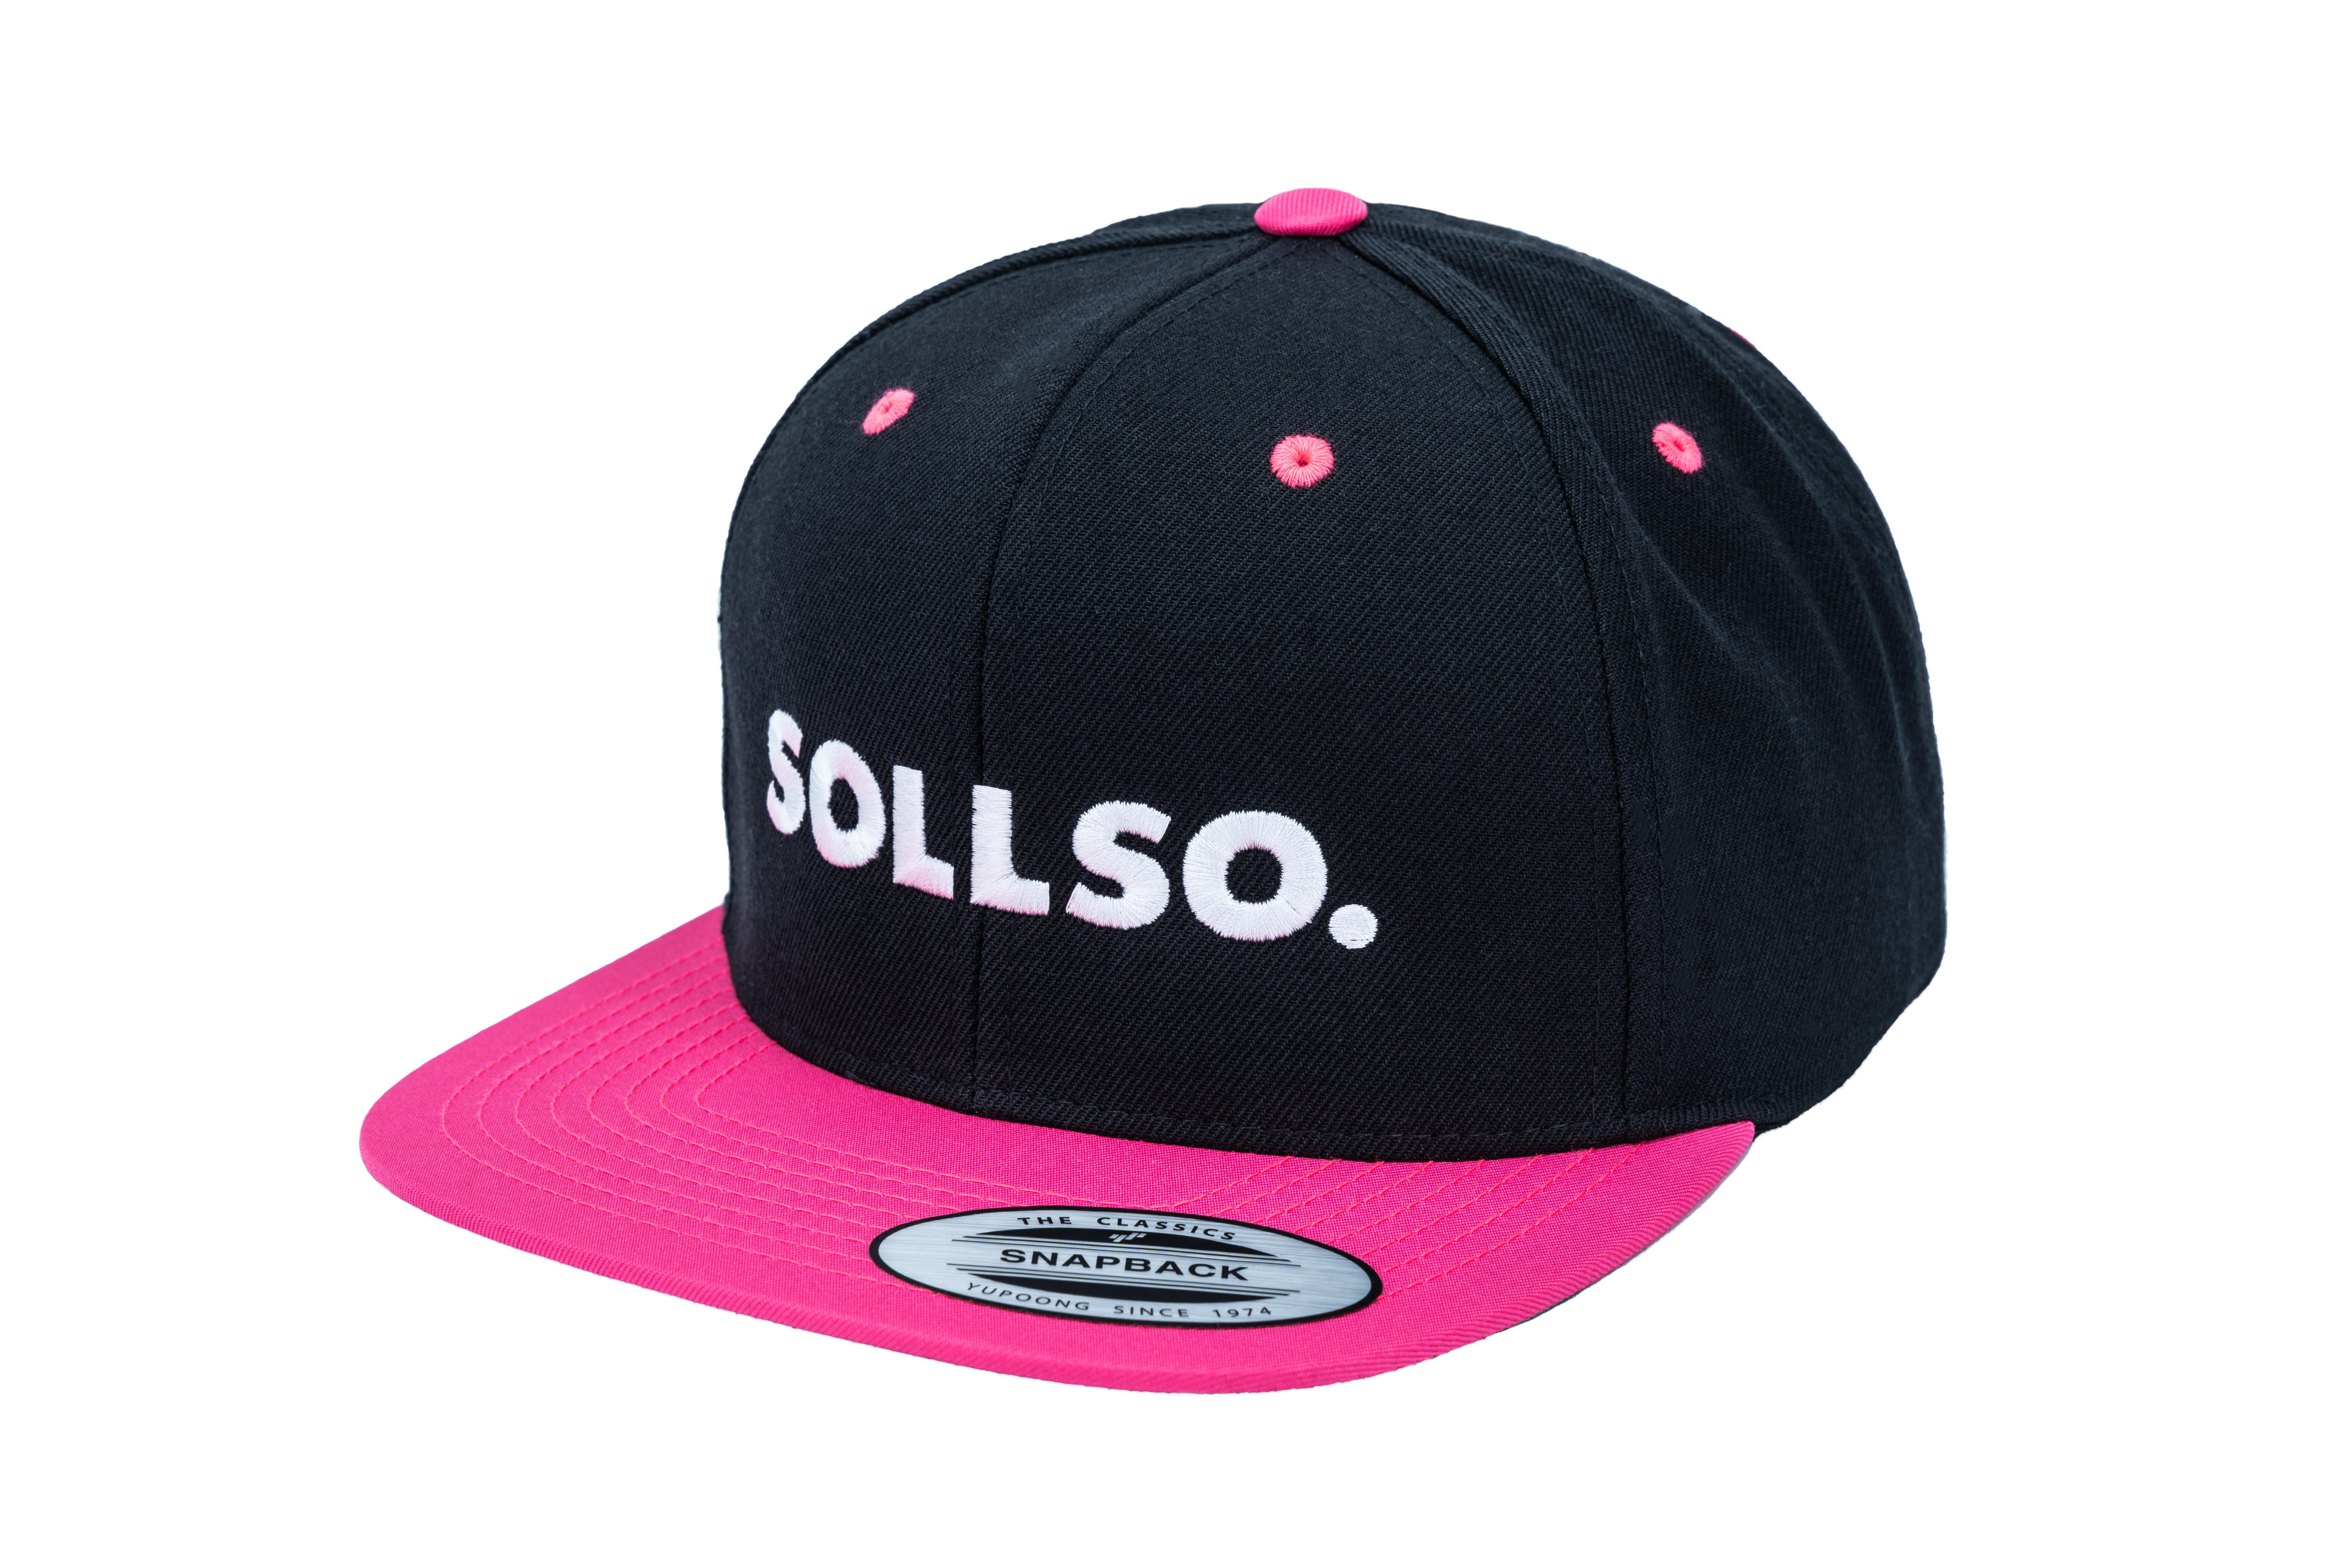 SOLLSO. Classic Snapback 2-Tone Cap, Black-Neon Pink